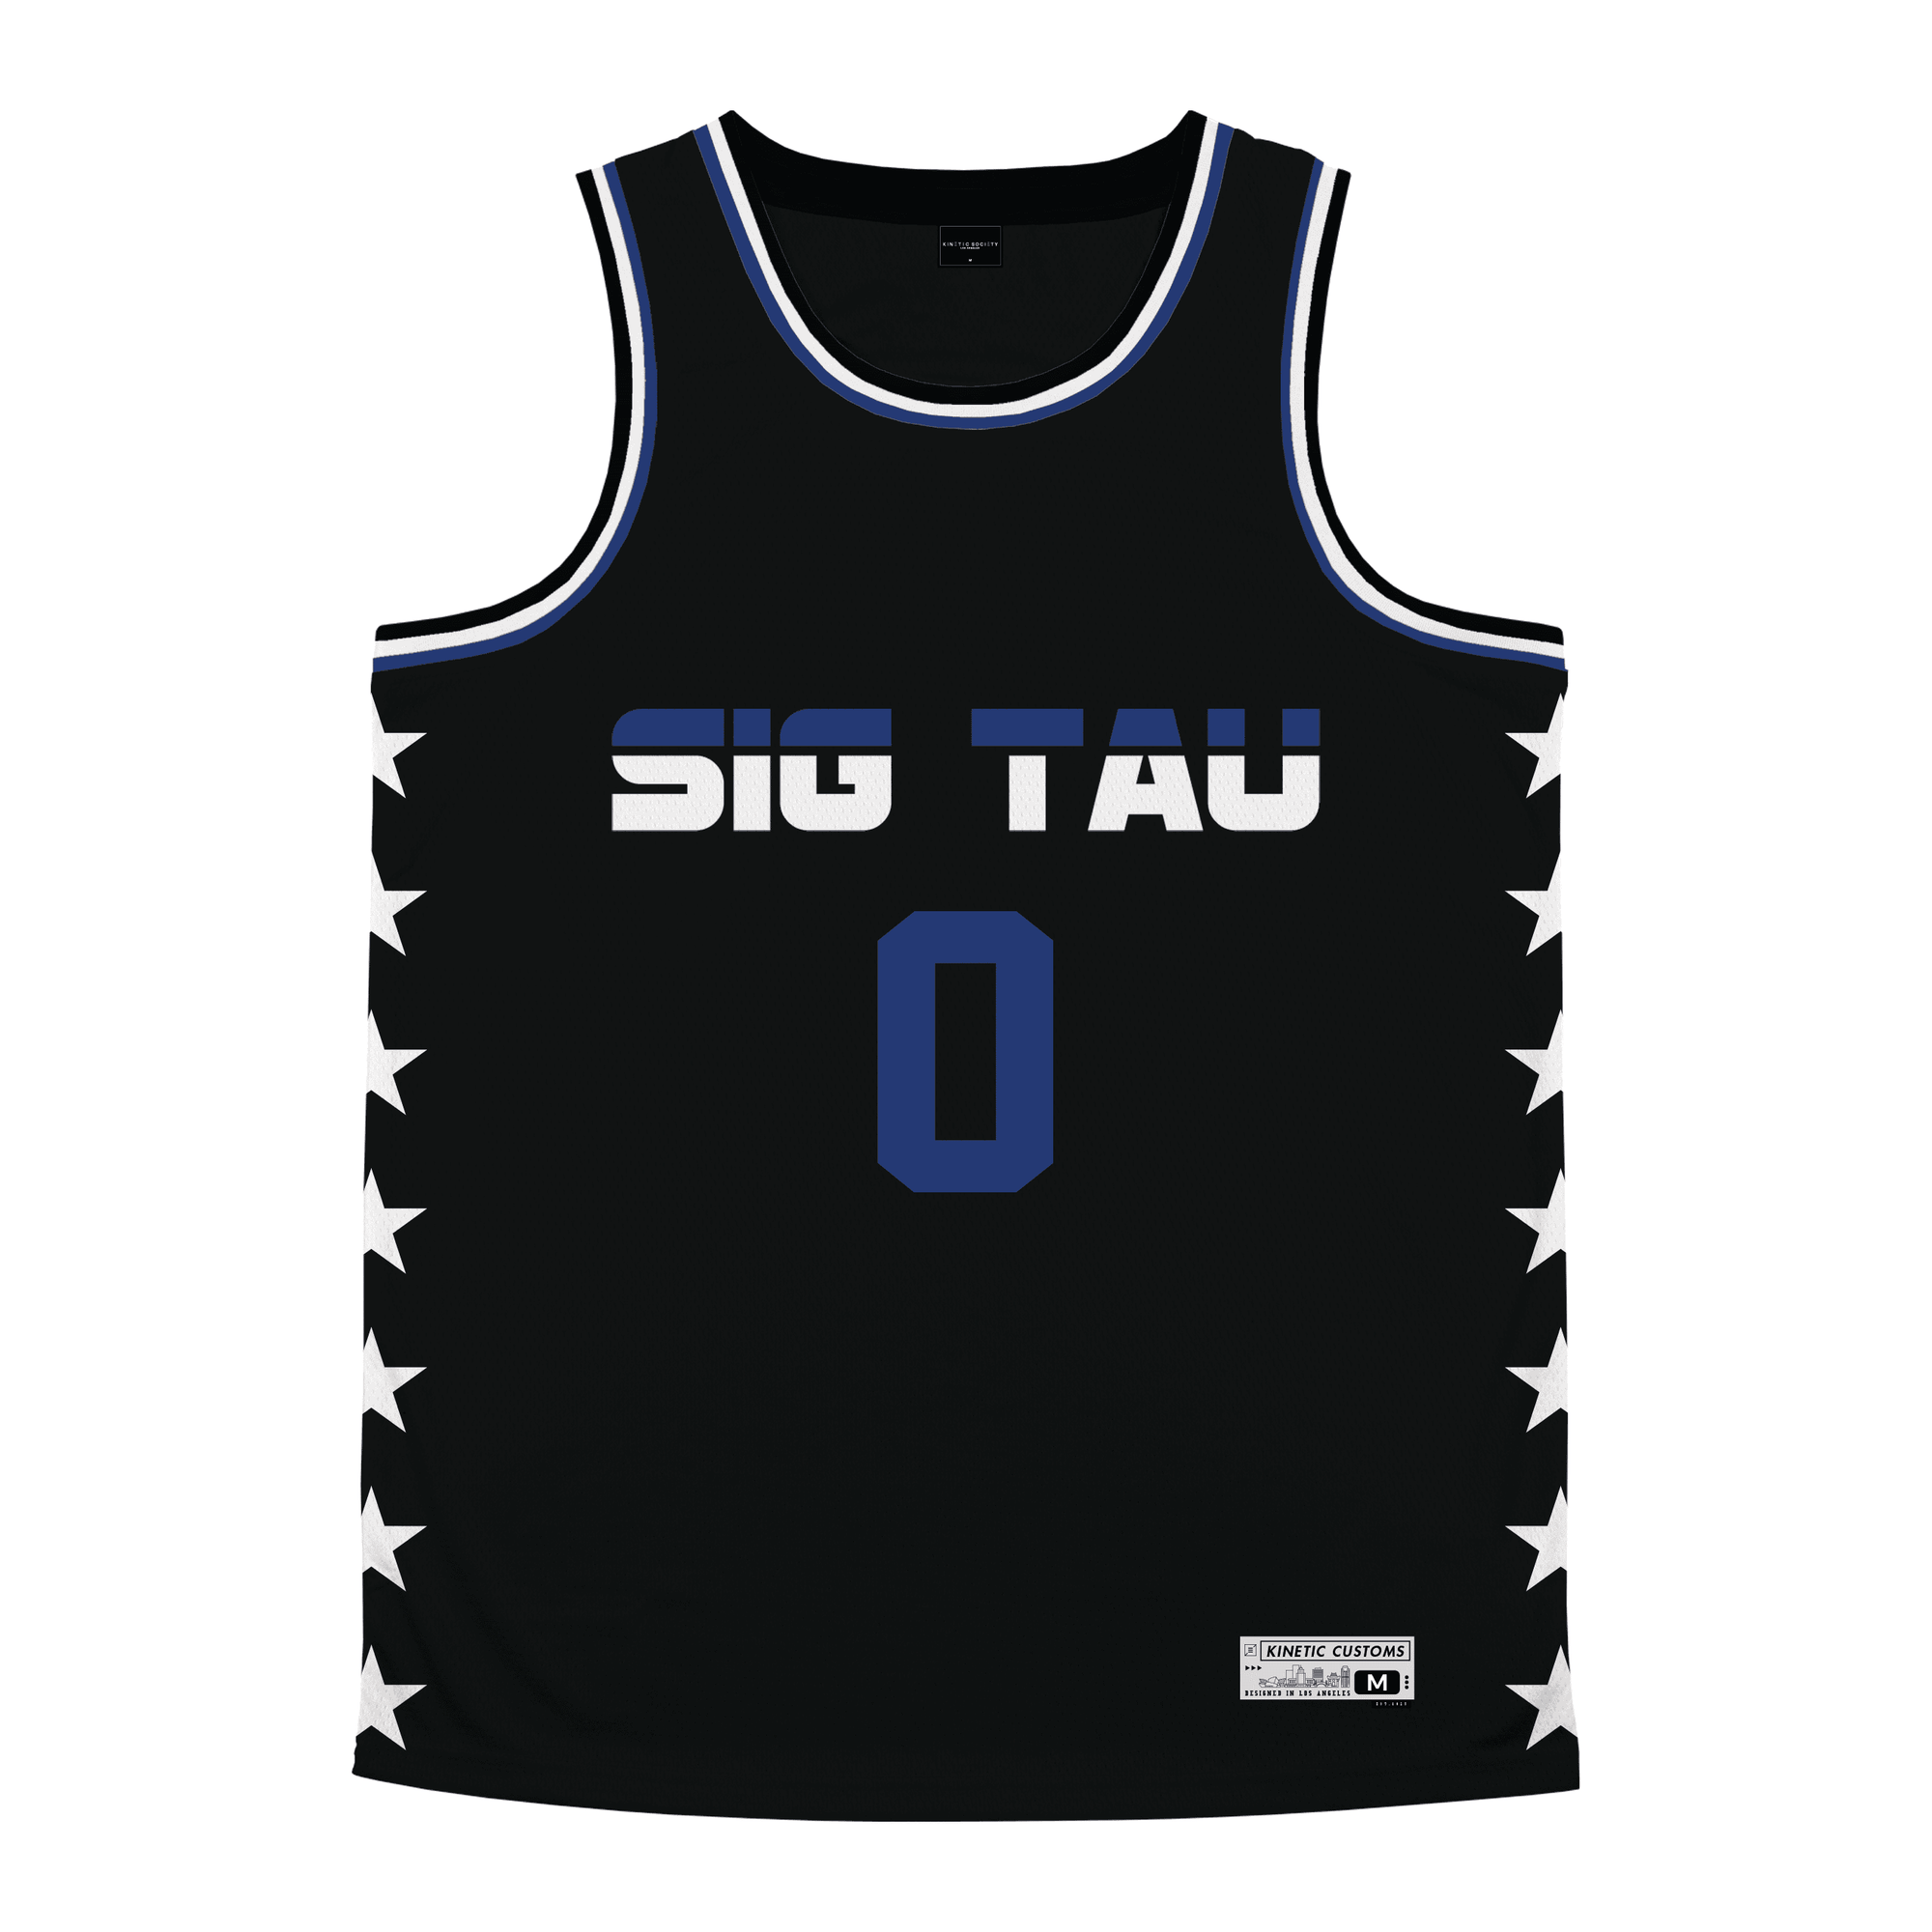 Sigma Tau Gamma - Black Star Night Mode Basketball Jersey